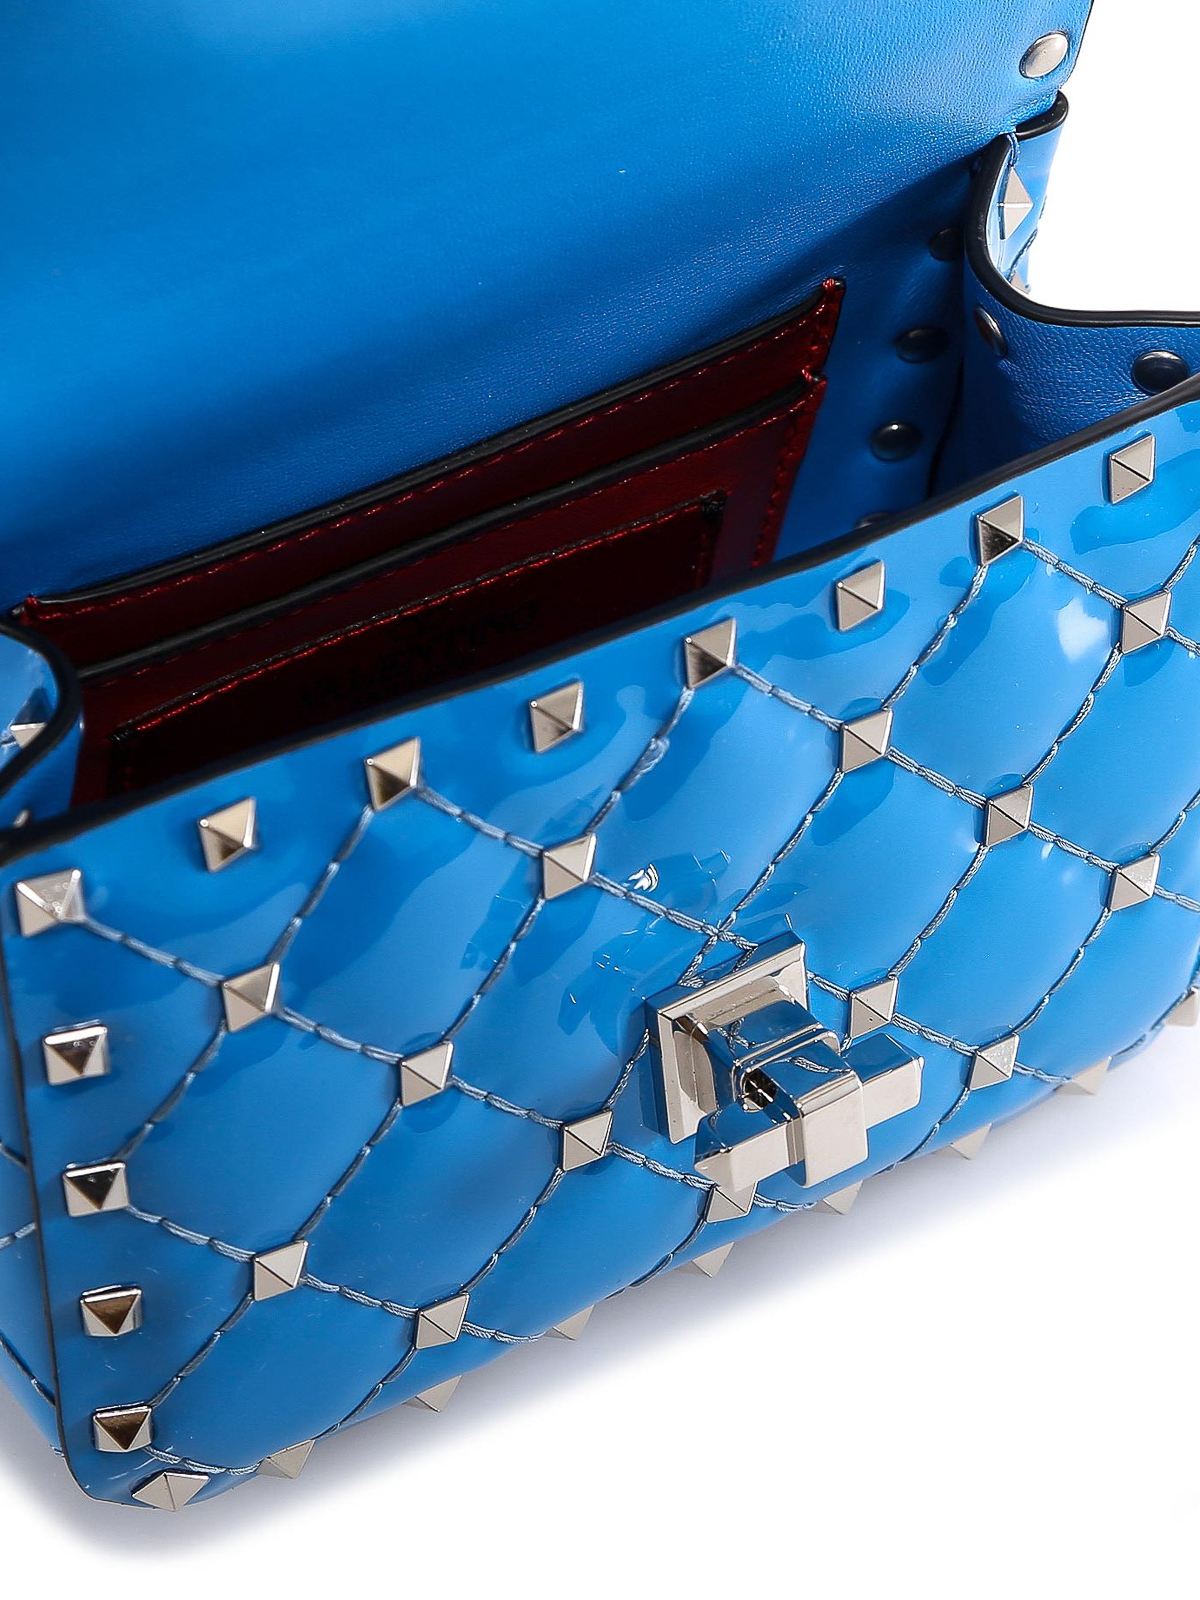 Valentino Garavani Rockstud Spike Micro Leather Crossbody Bag in Blue -  Valentino Garavani